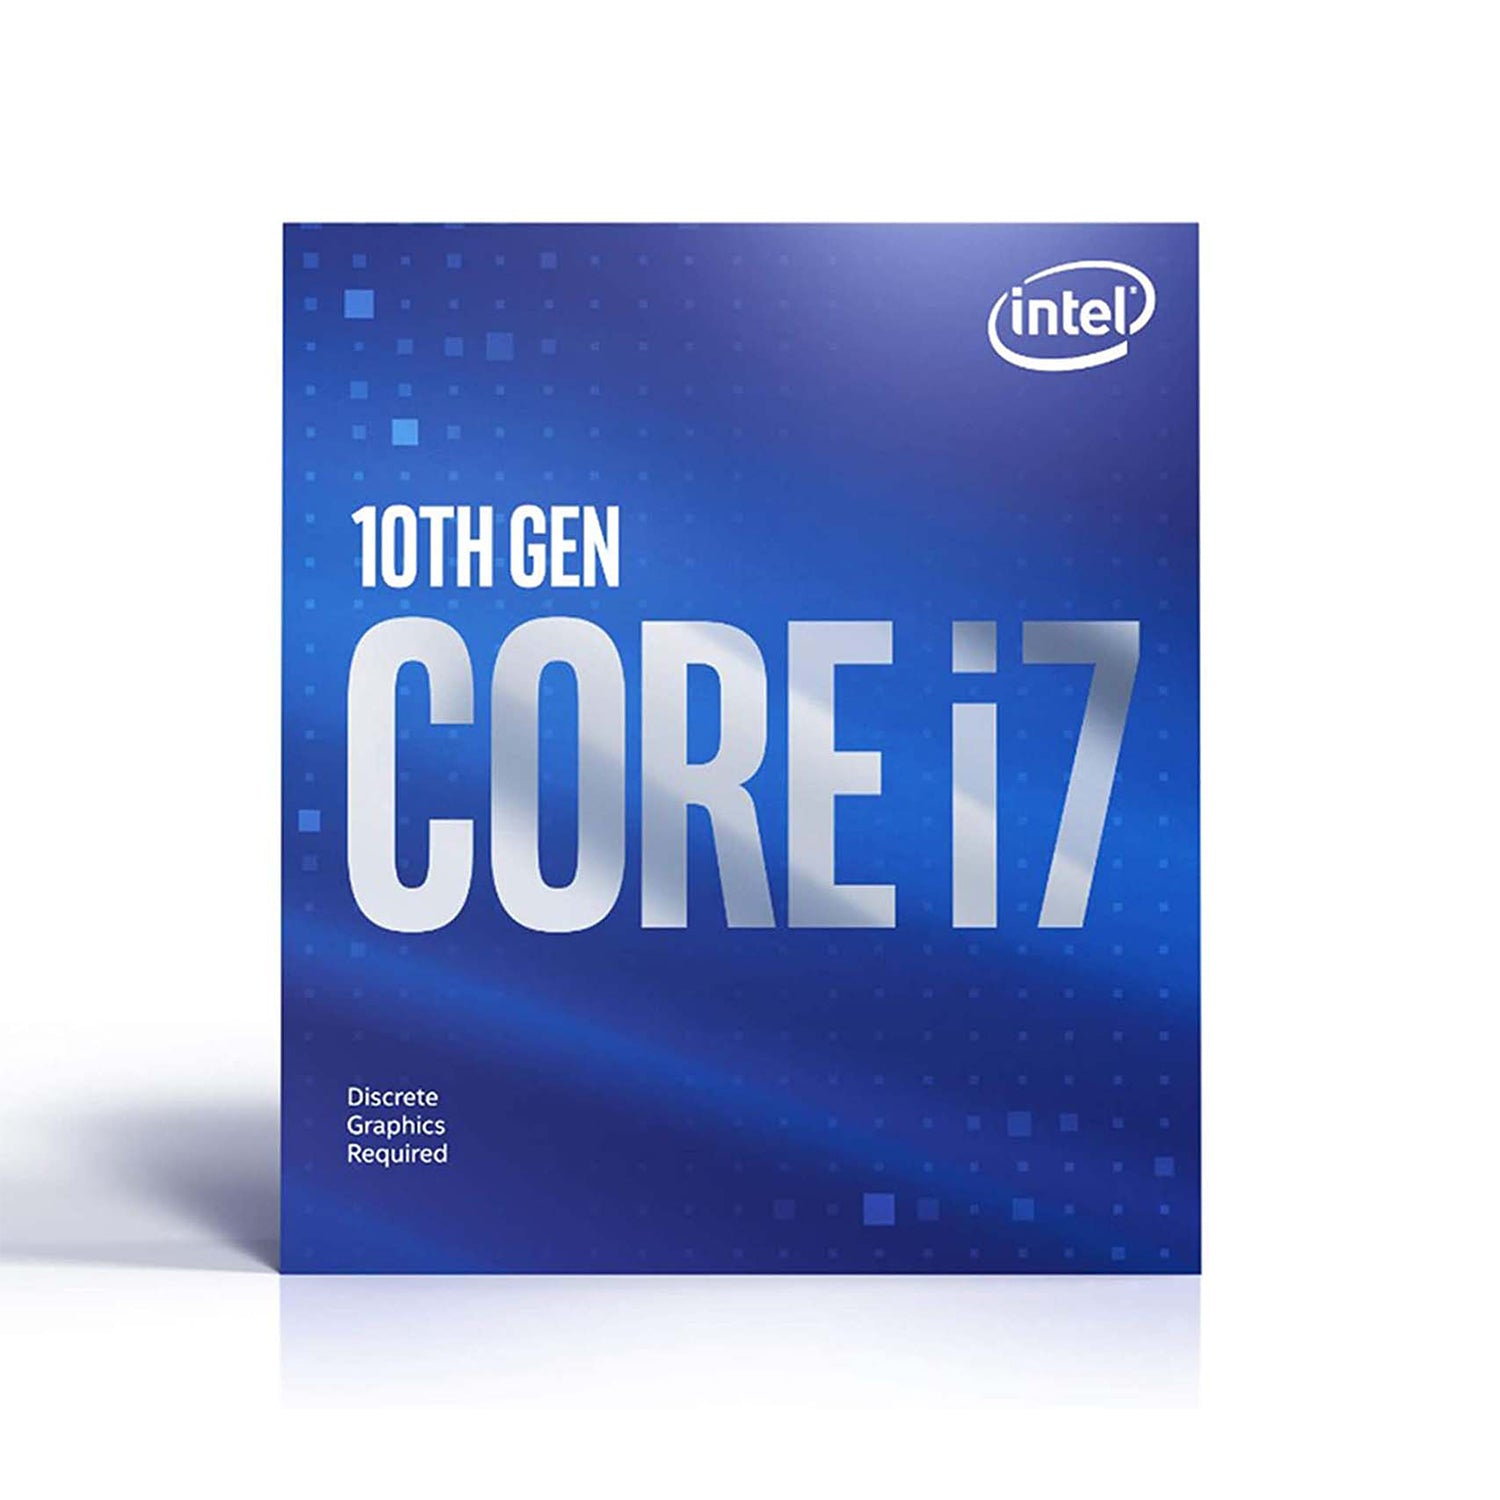 Intel Core i7-10700F - Core i7 10th Gen Comet Lake 8-Core 2.9 GHz up to 4.80 GHz LGA 1200, 16 MB Intel Smart Cache, 65W, Desktop Processor - BX8070110700F